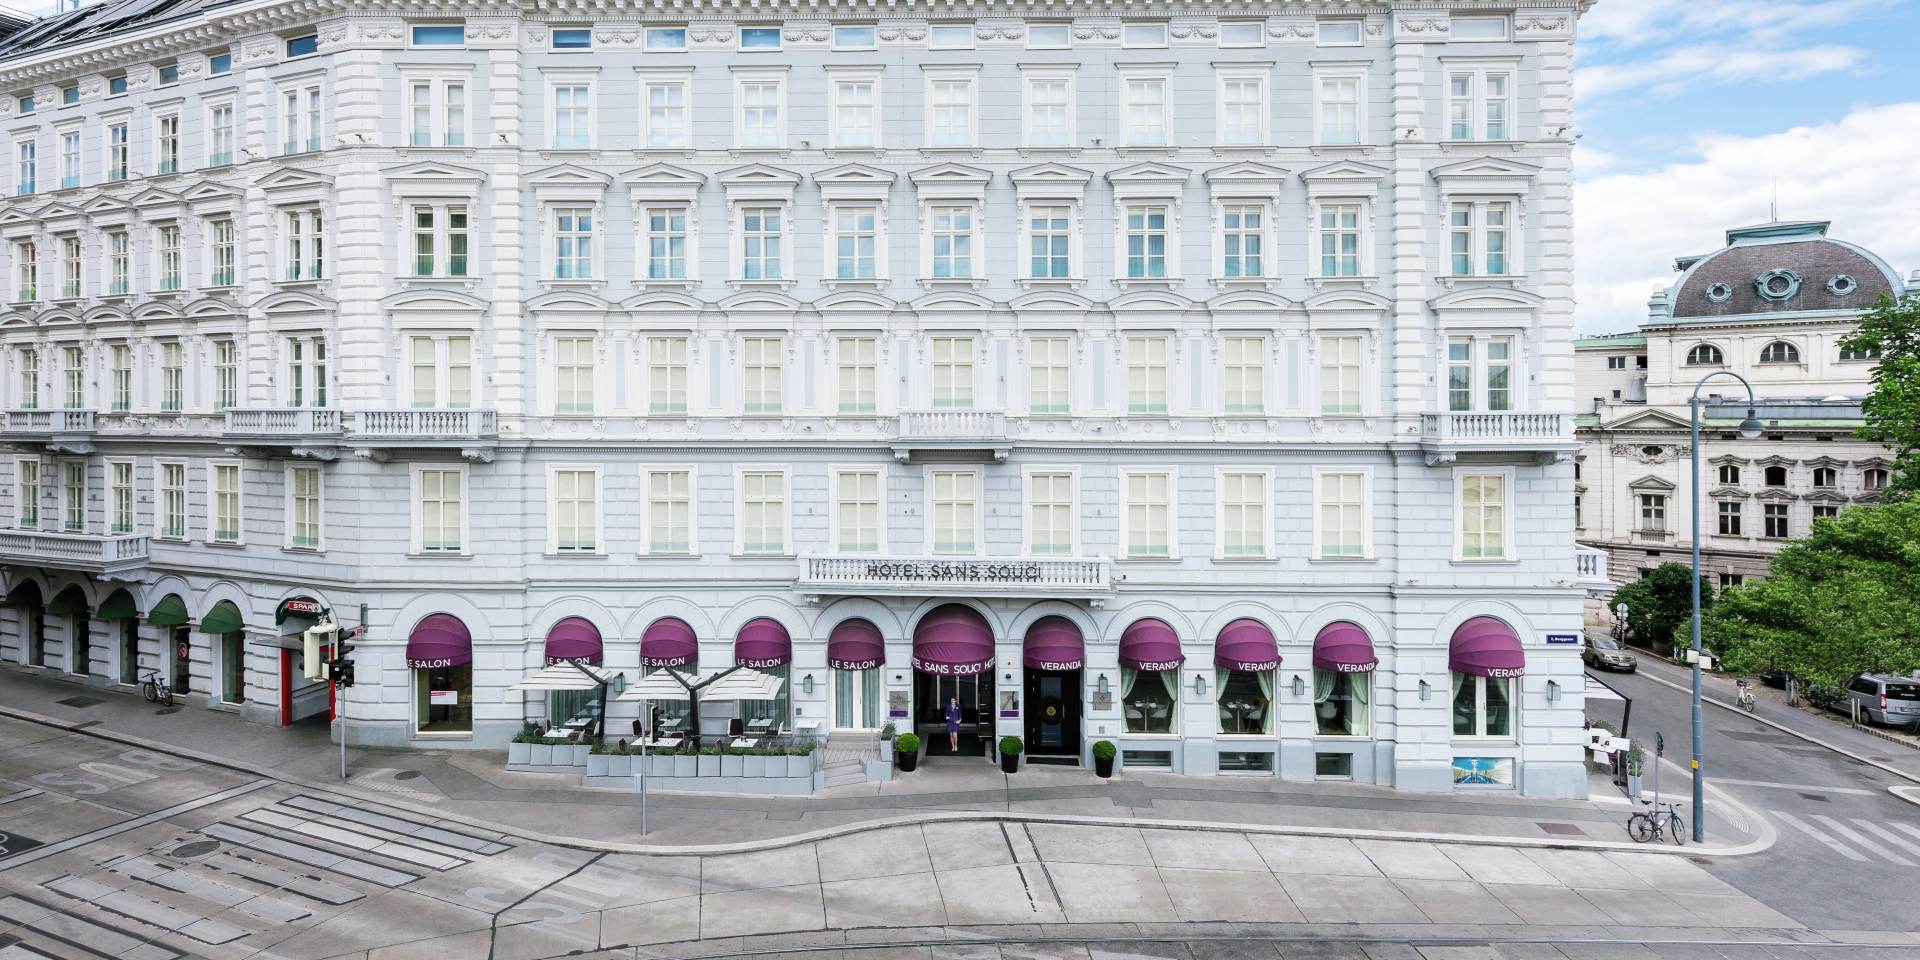 Hotel Sans Souci Wien - exterior view © Stefan Gergely